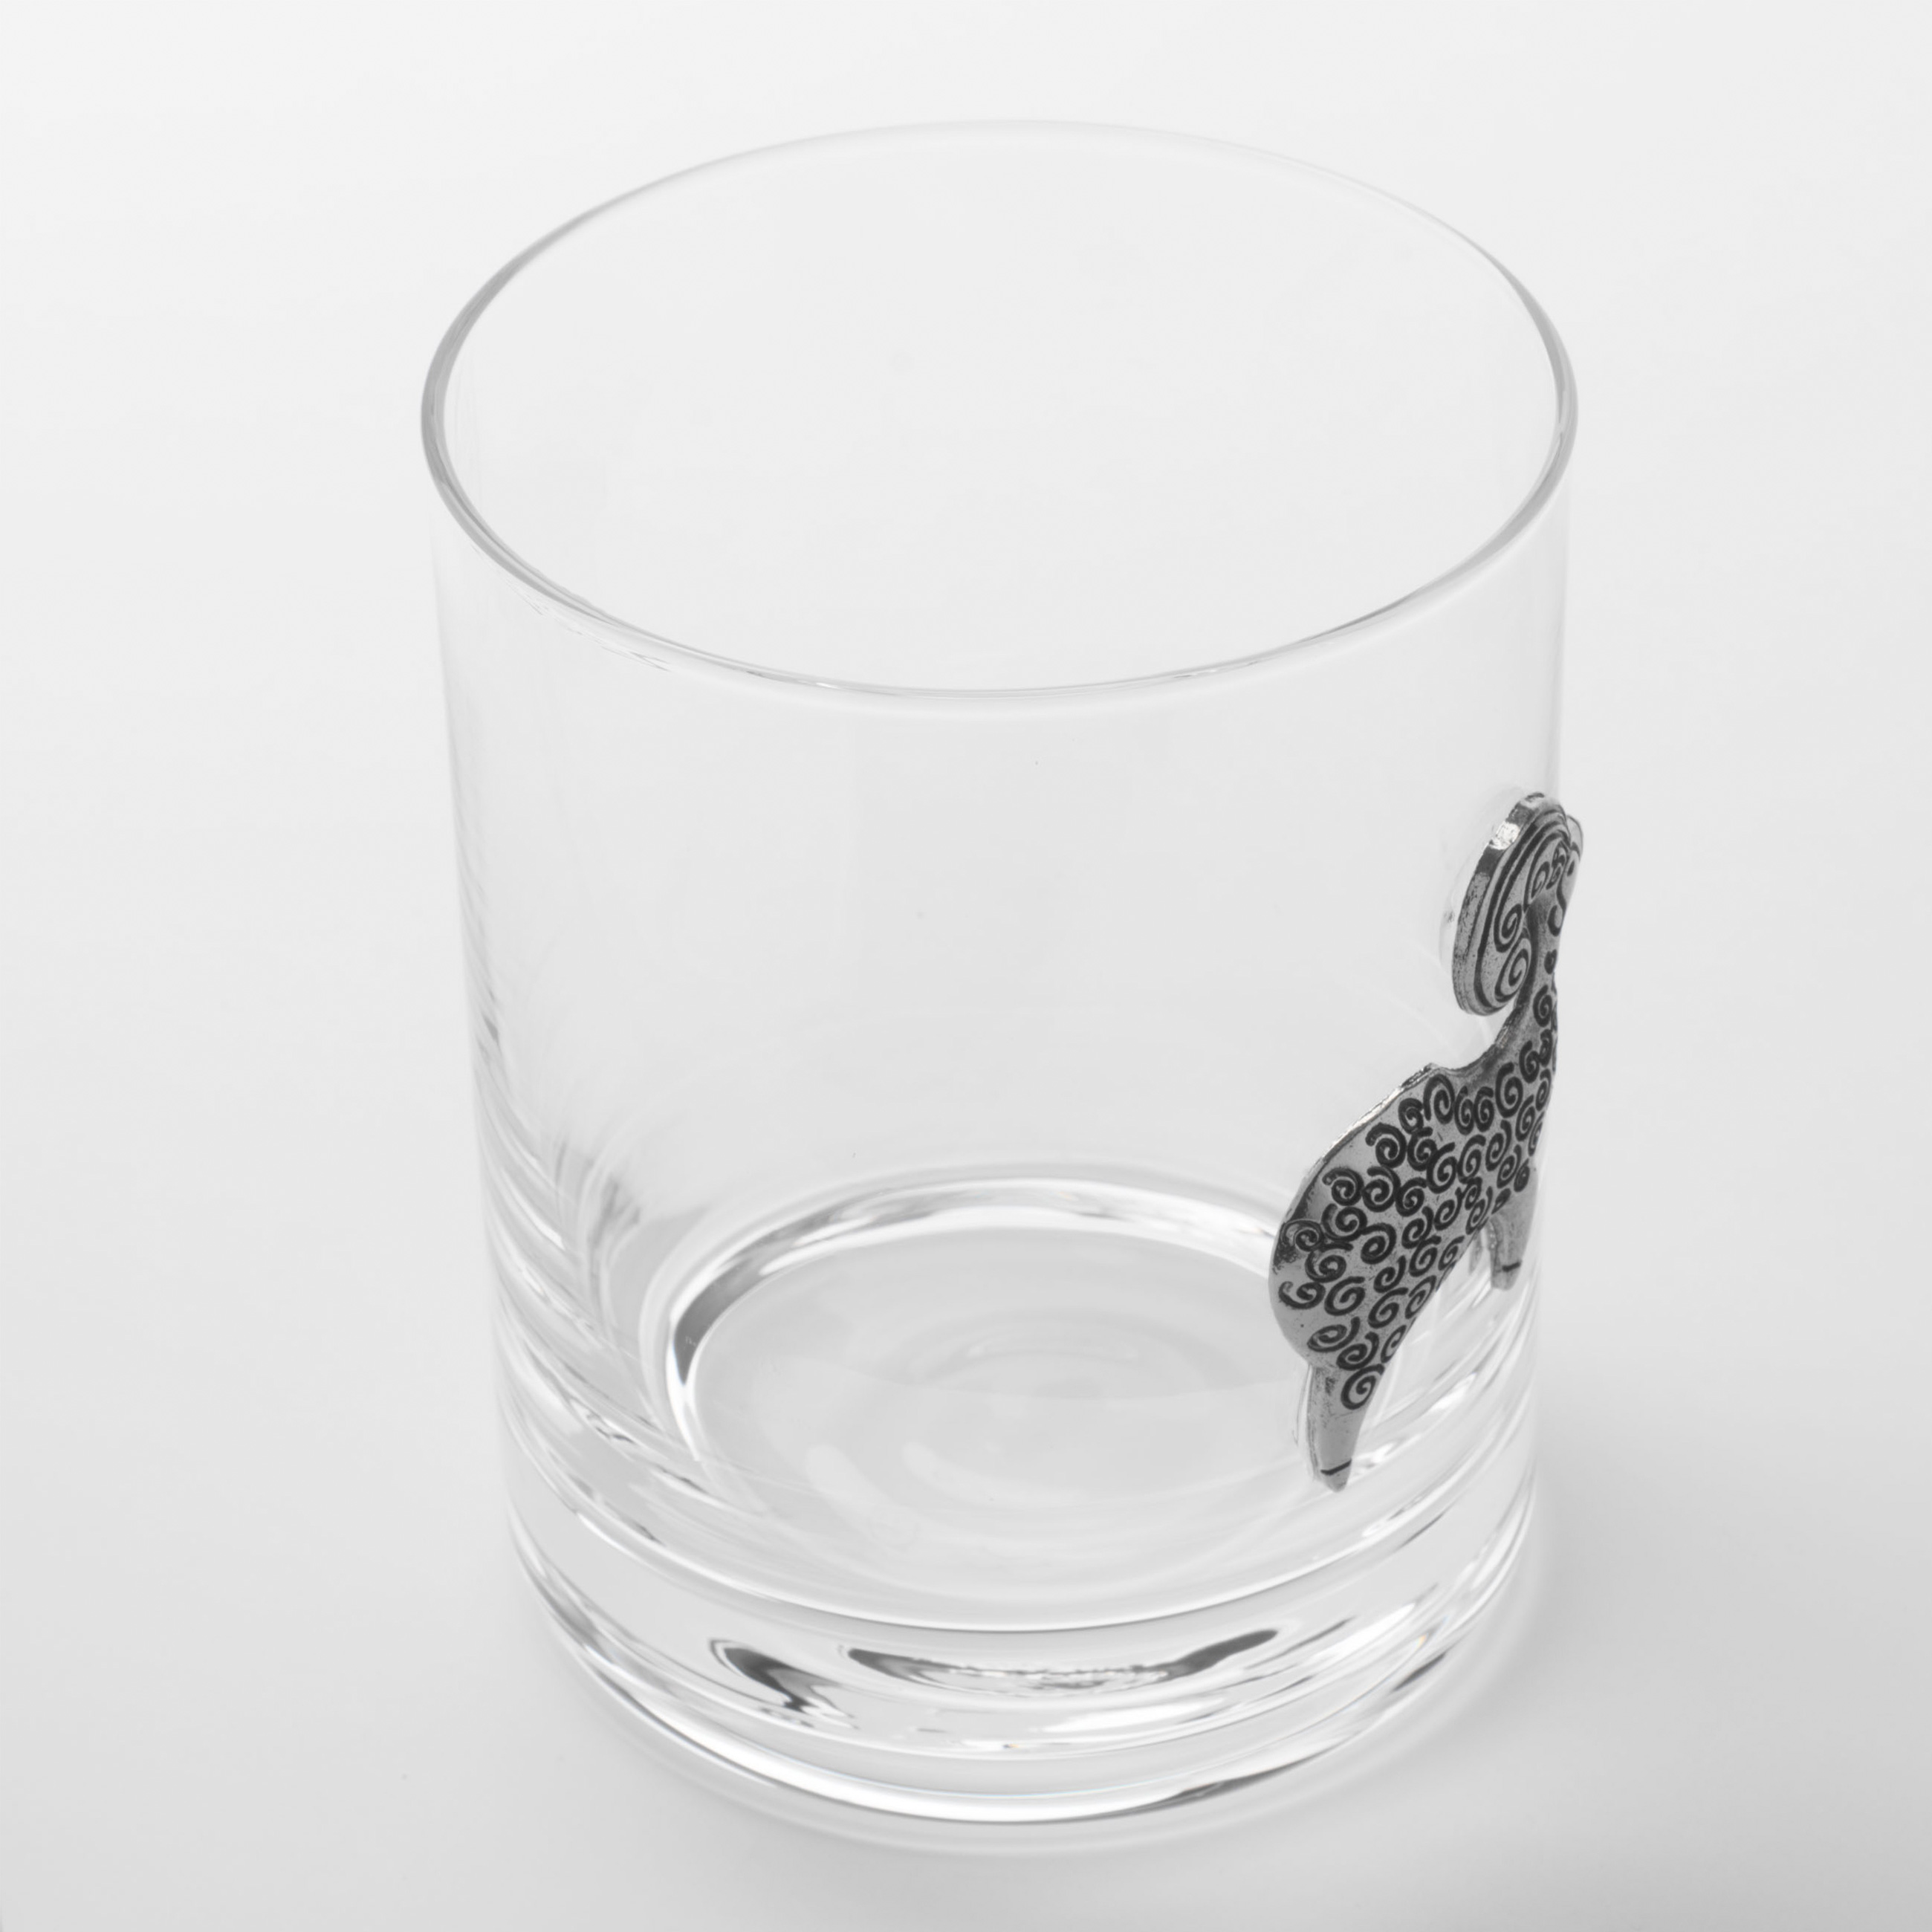 Стакан для виски, 340 мл, стекло/металл, серебристый, Овен, Zodiac изображение № 3